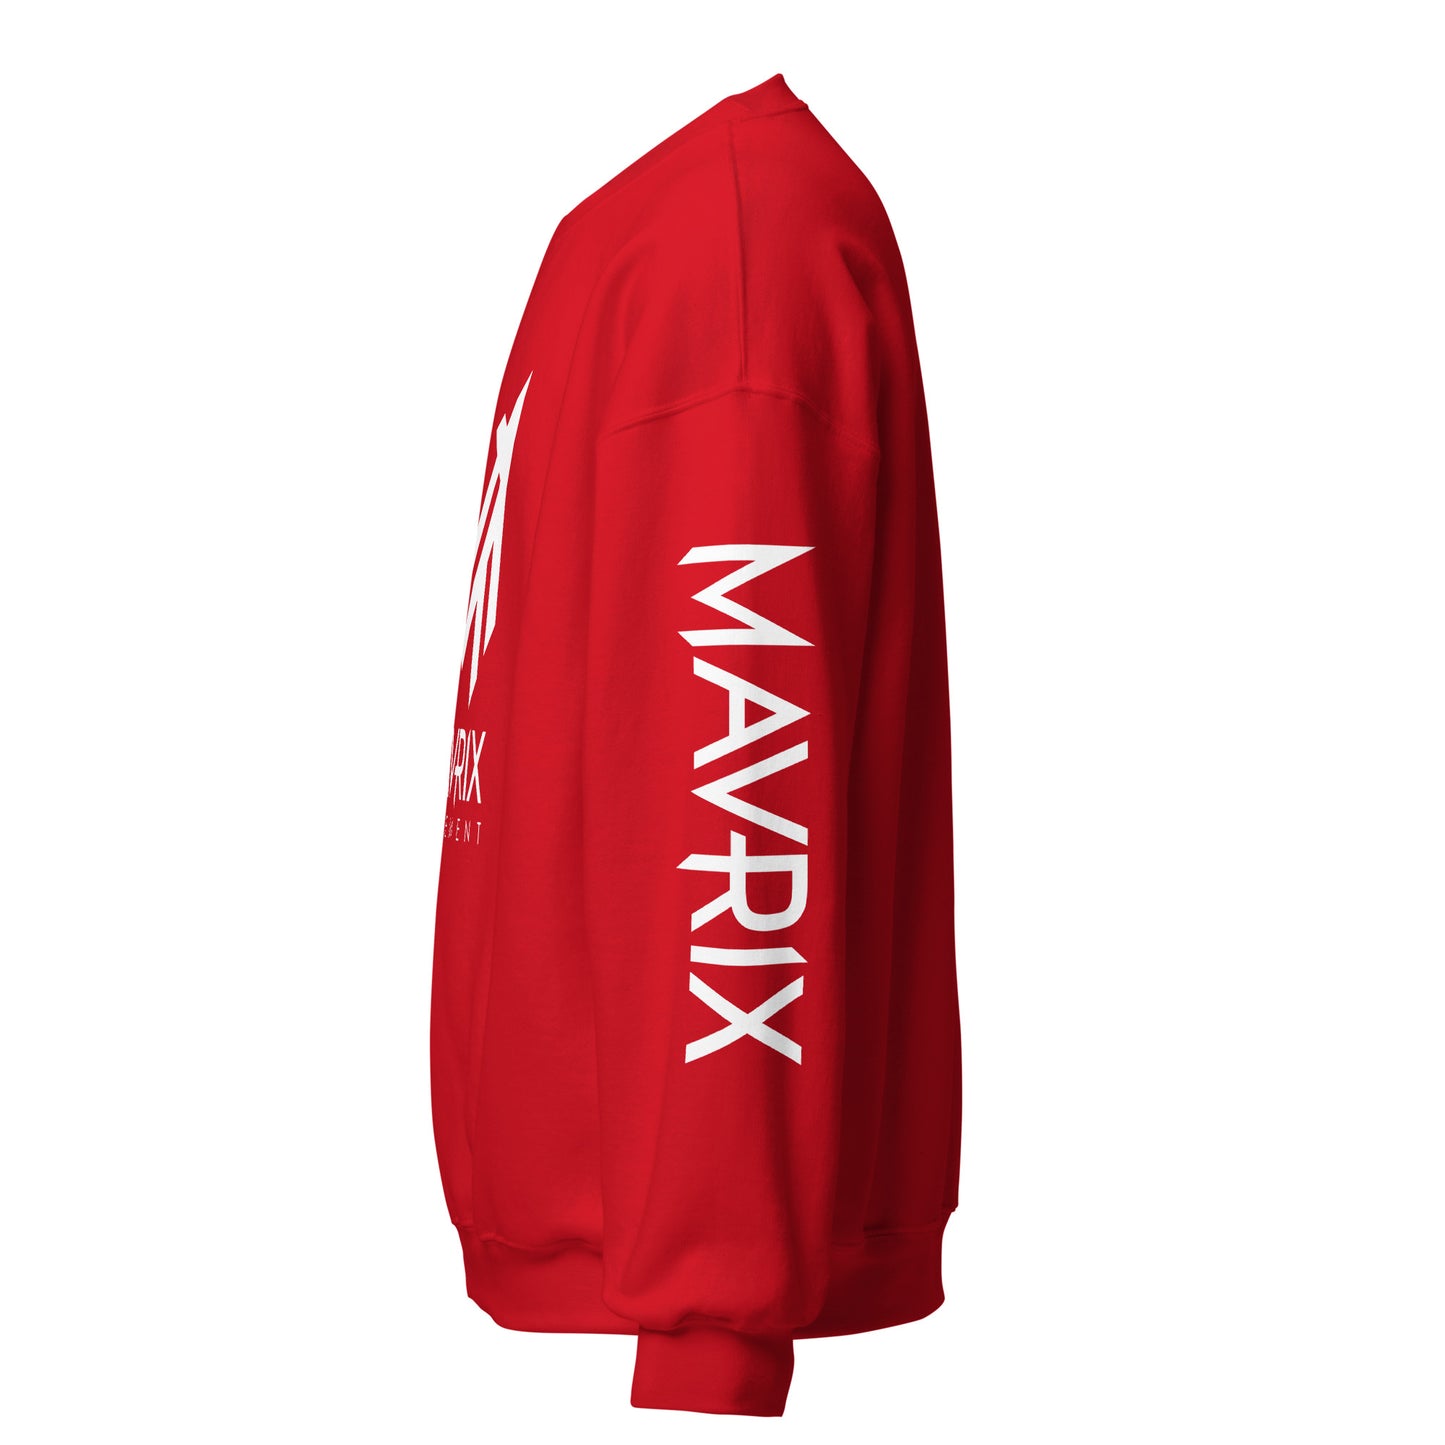 Mavrix Signature Sweatshirt (7 colors)